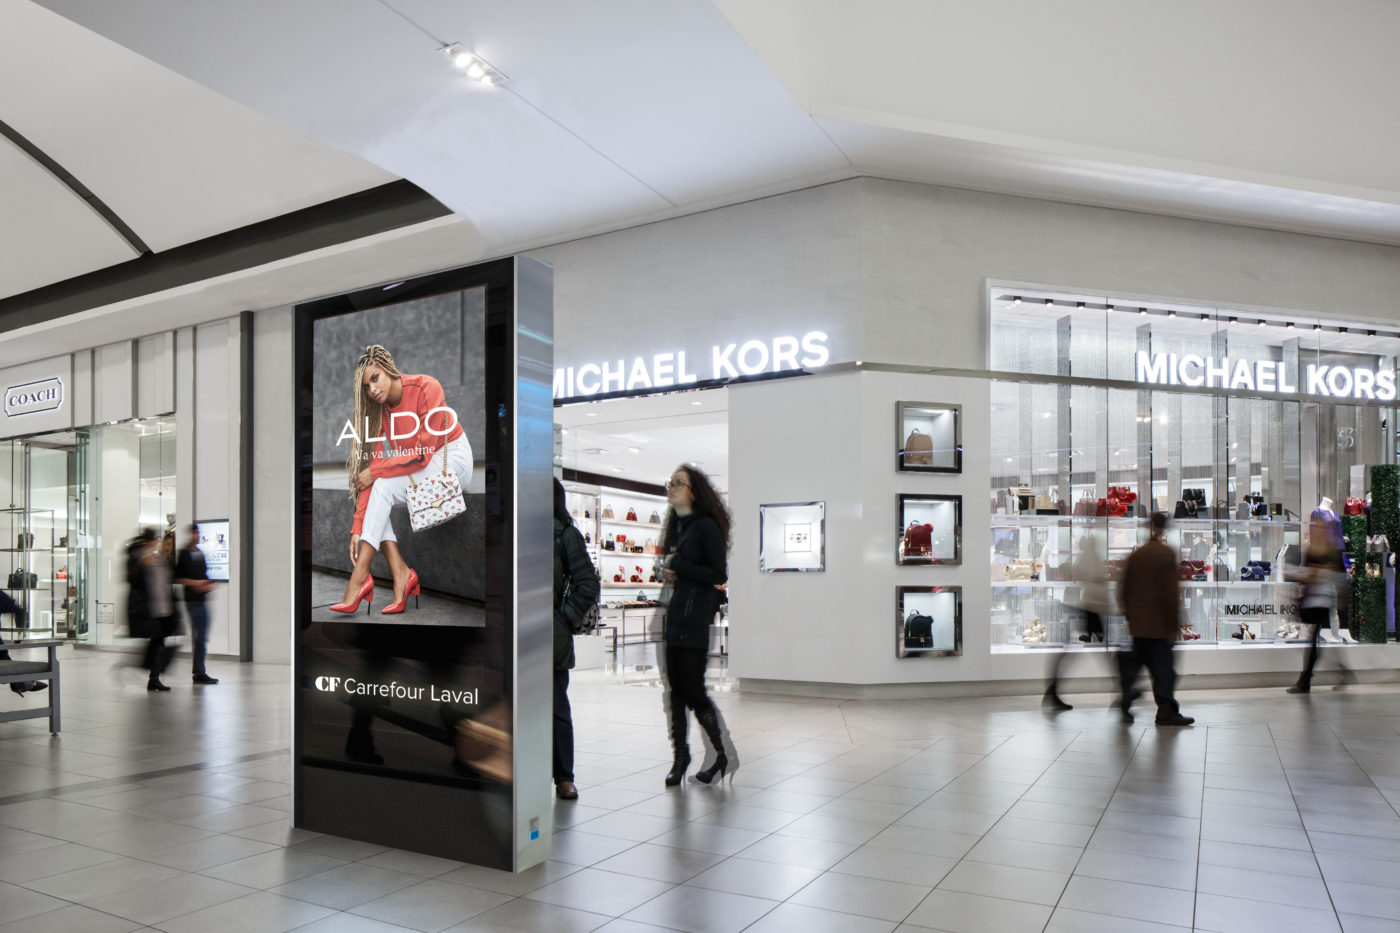 Aldo - Malls - CF Carrefour Laval - Digital Directory (Laval, Quebec)